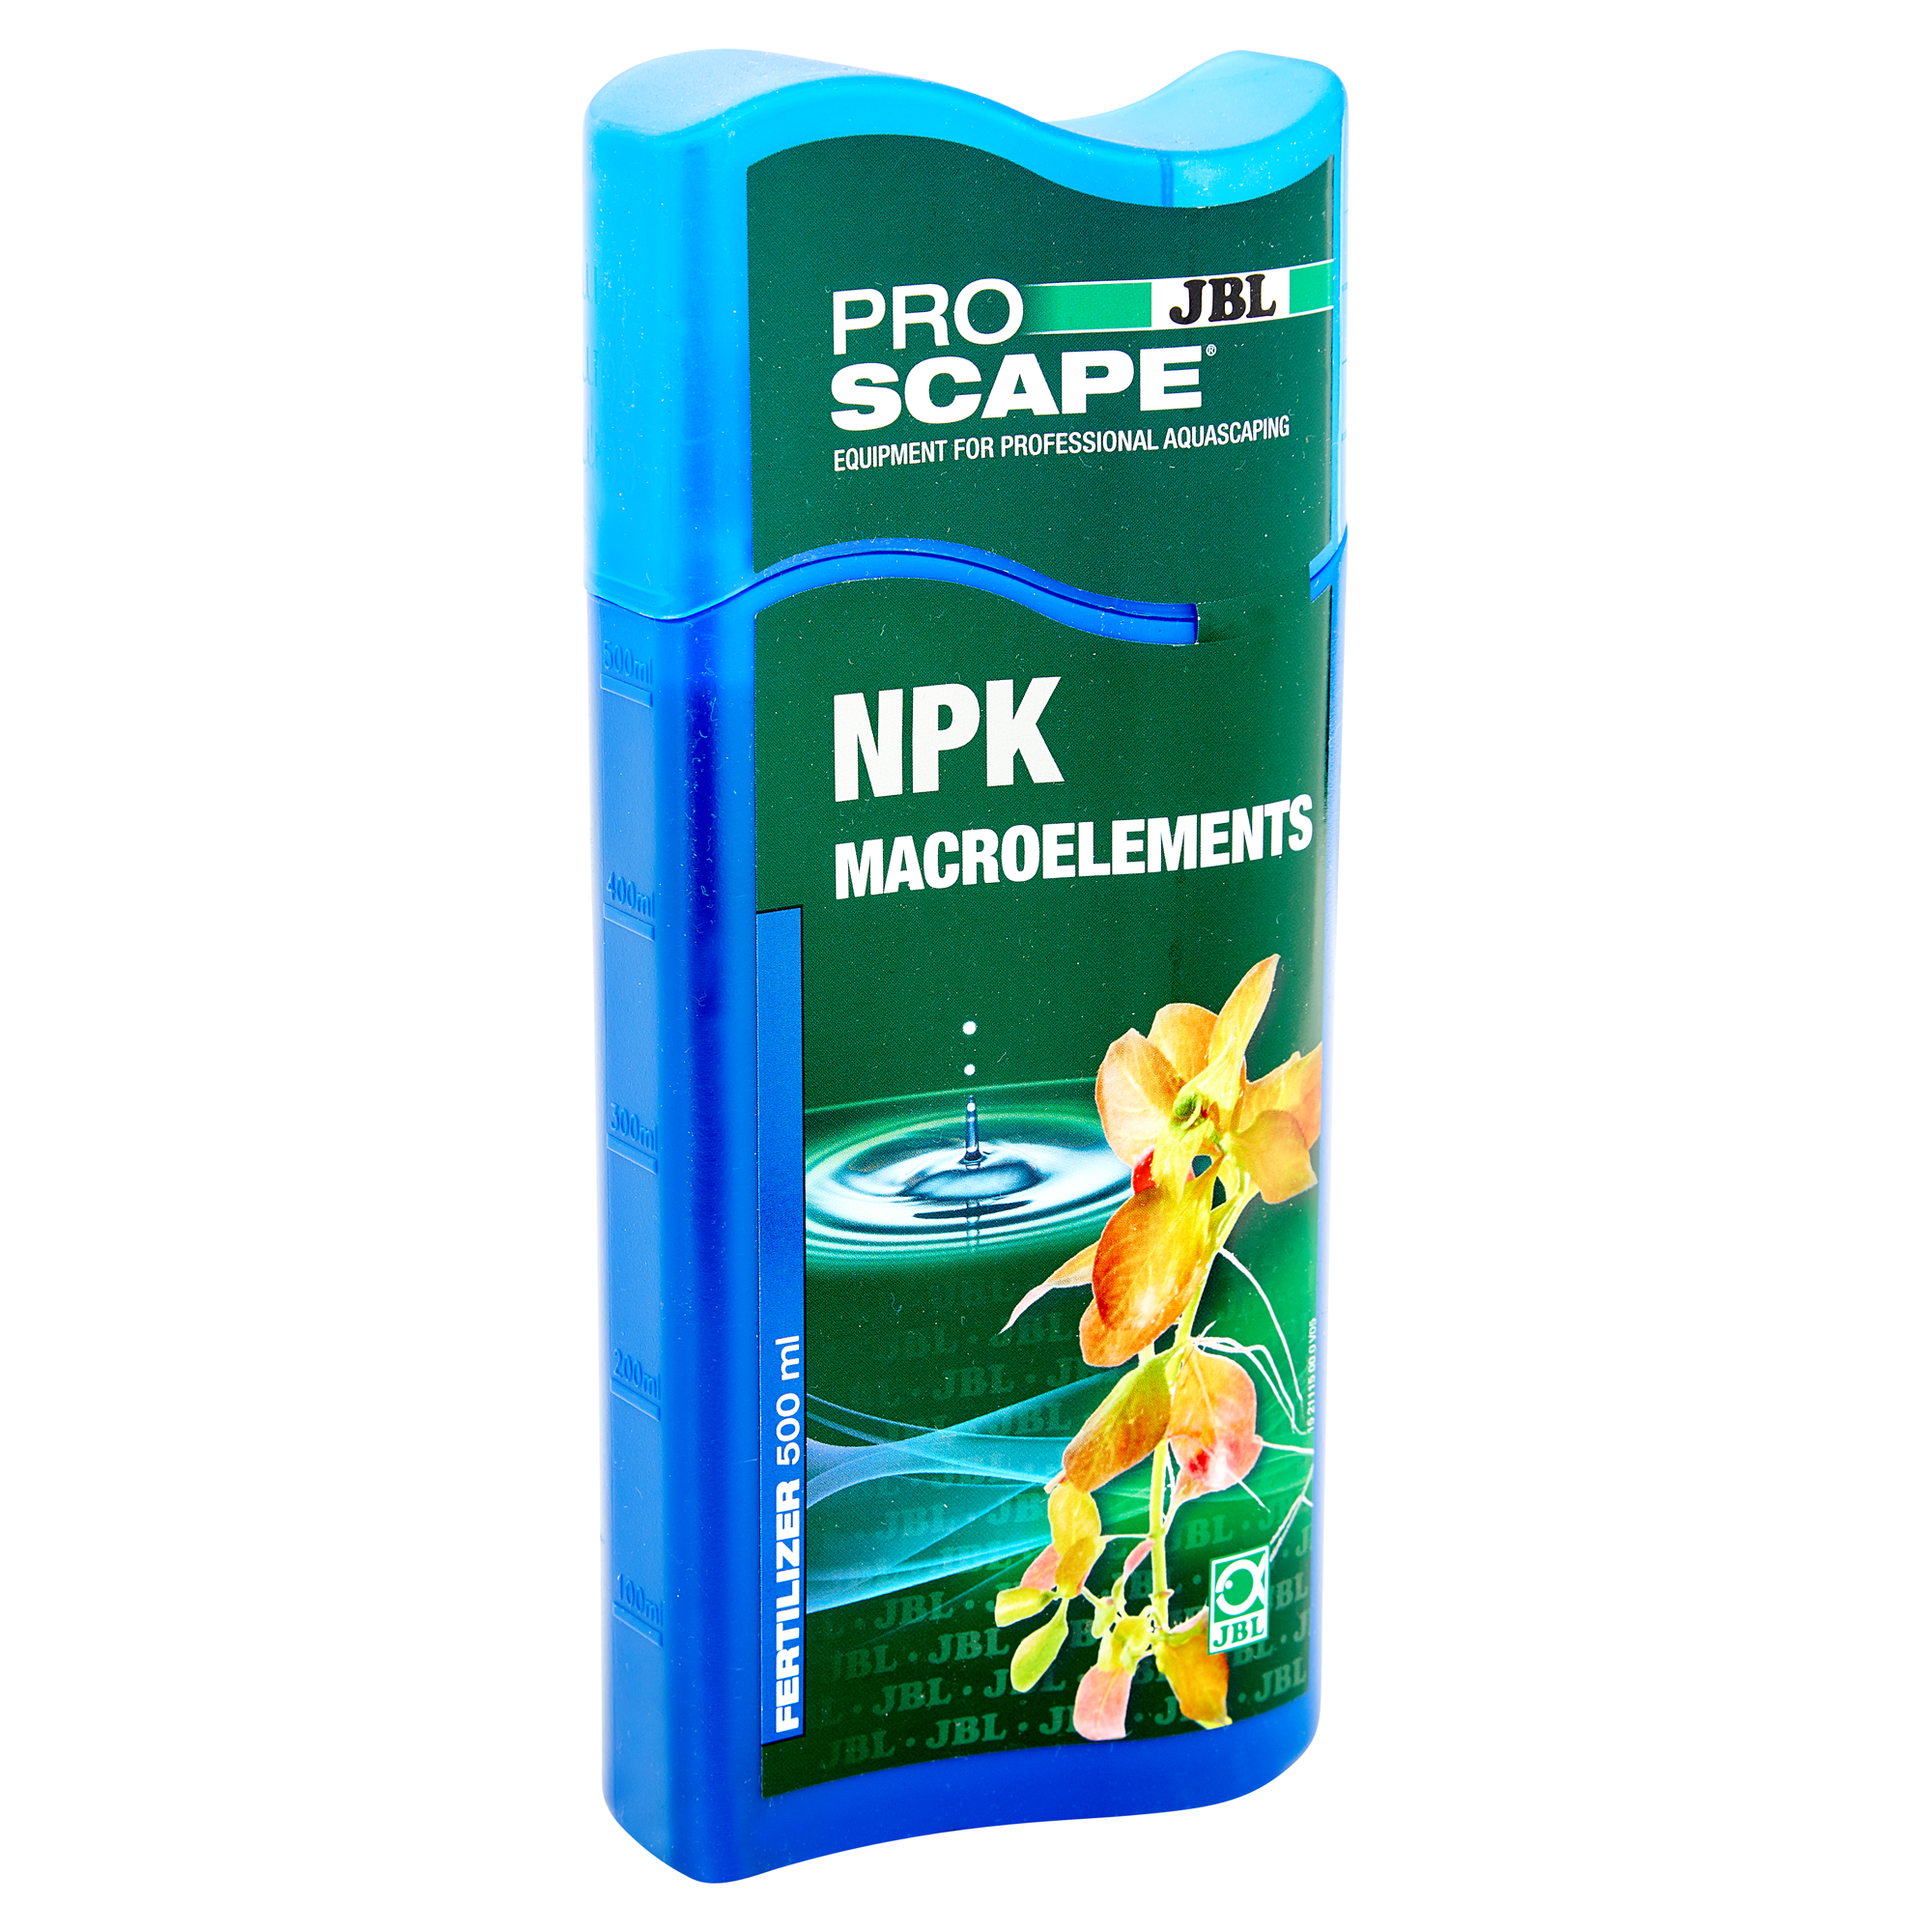 Pflanzendünger "ProScape" NPK Macroelements 500 ml + product picture